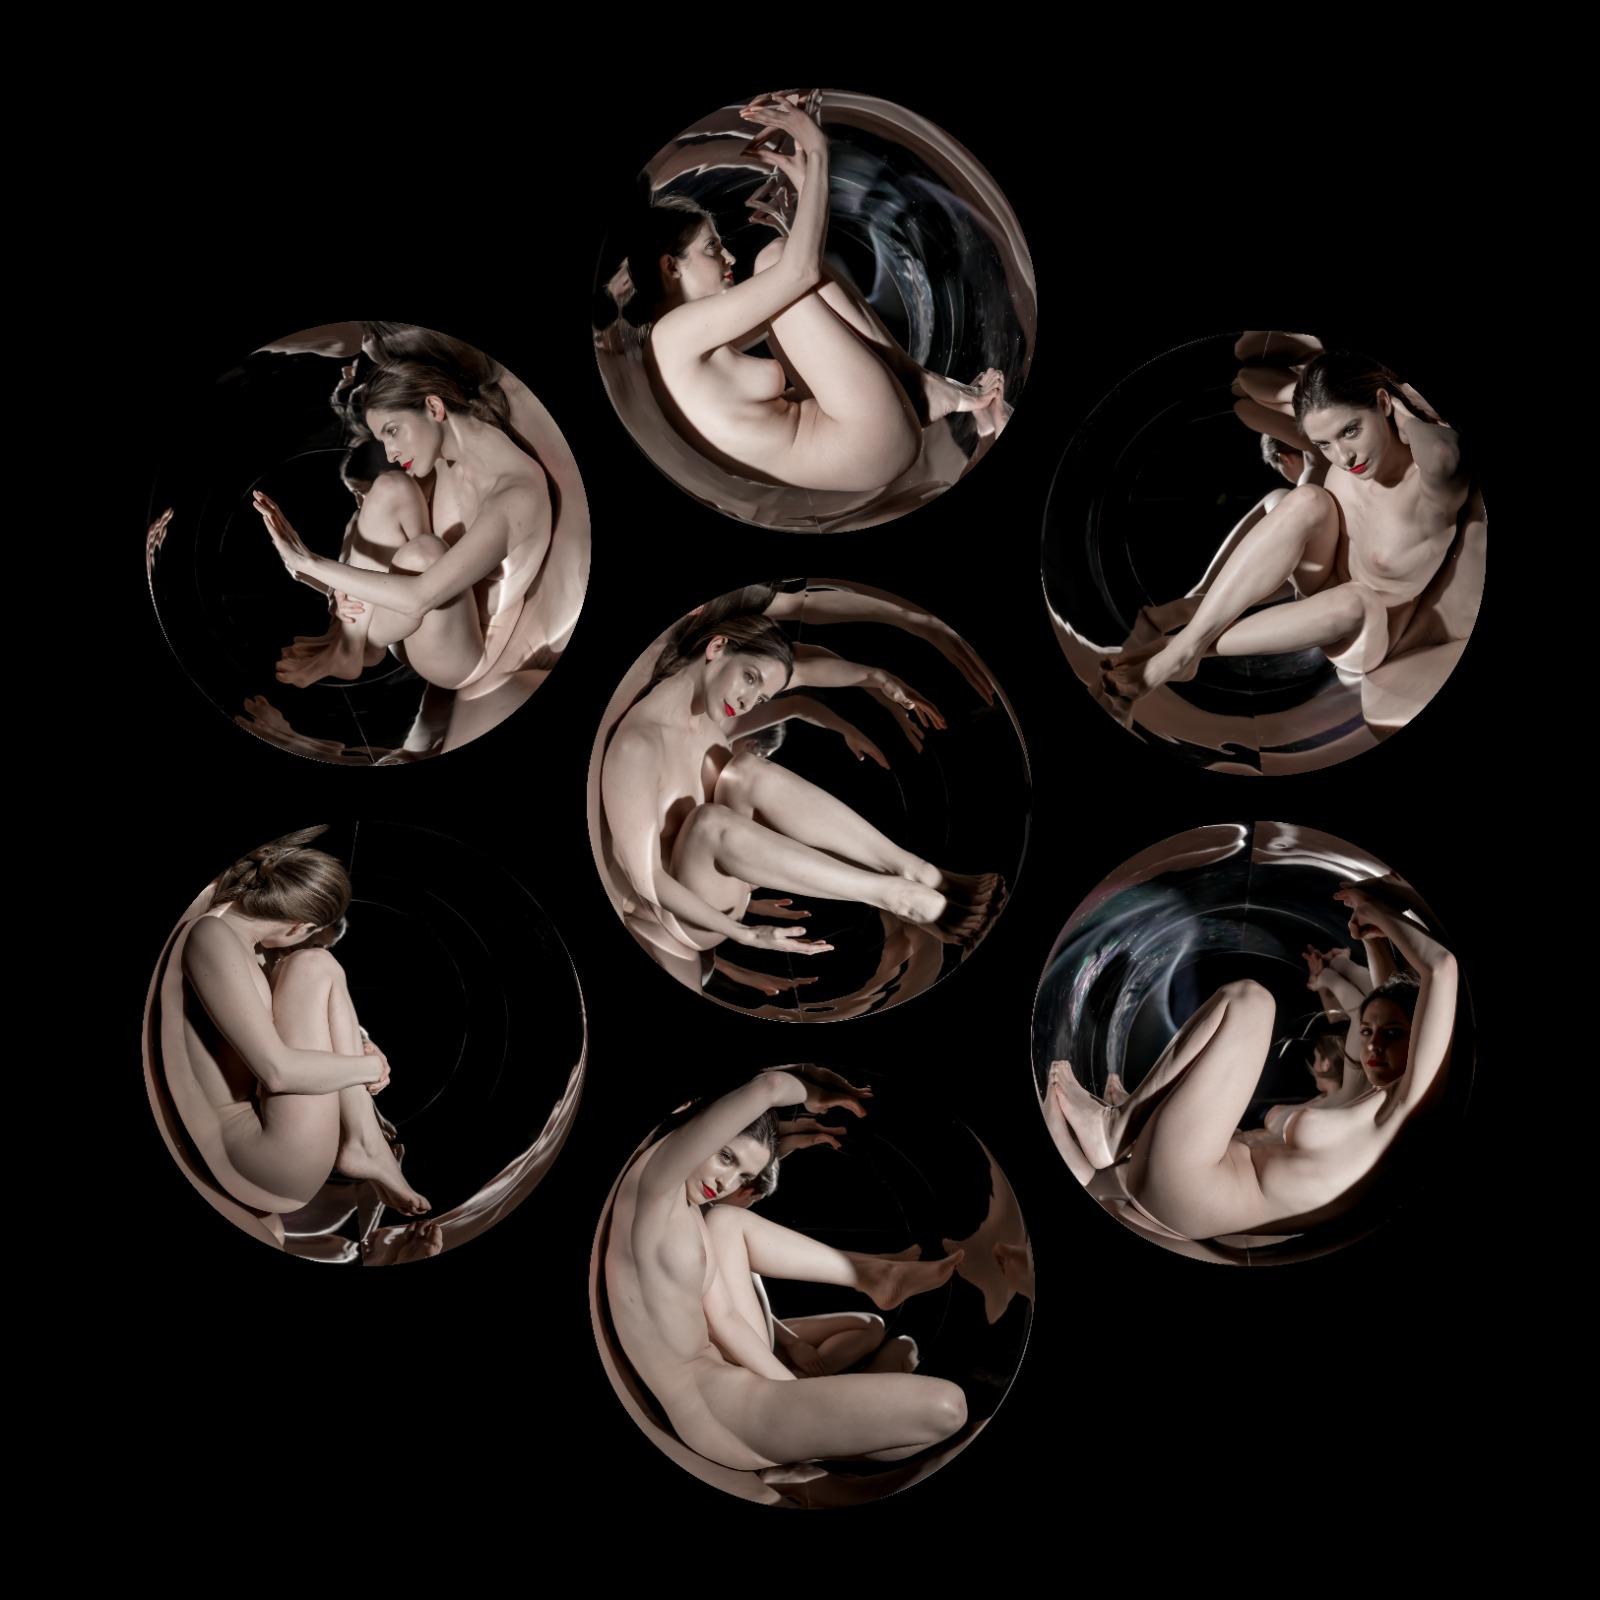 Jeff Robb Figurative Photograph - "Cir1" 3-D Lenticular Black & White figurative nude photo framed, contemporary